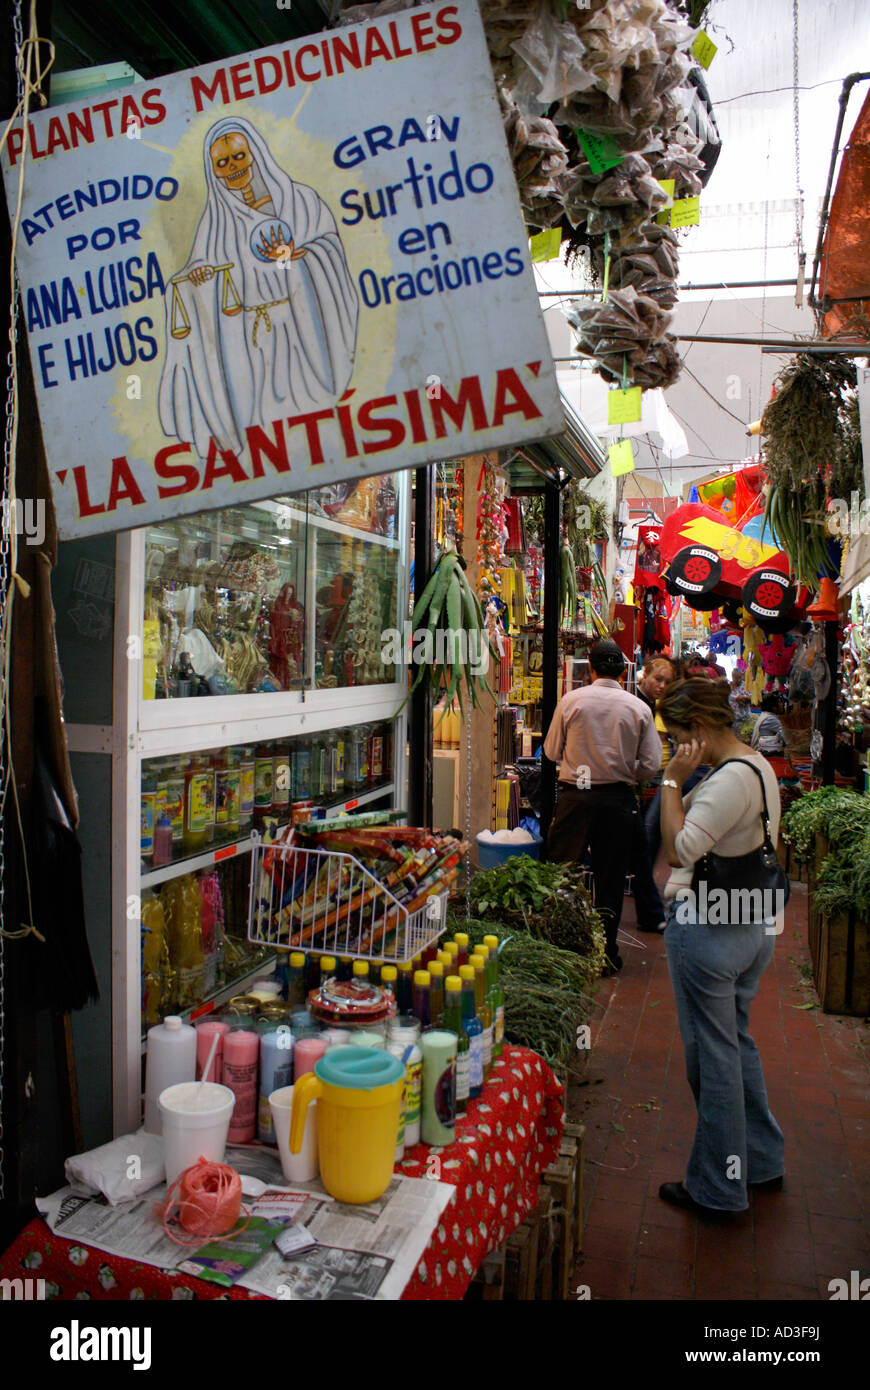 Woman shopping for medicinal plants in the market, city of Veracruz Mexico Stock Photo